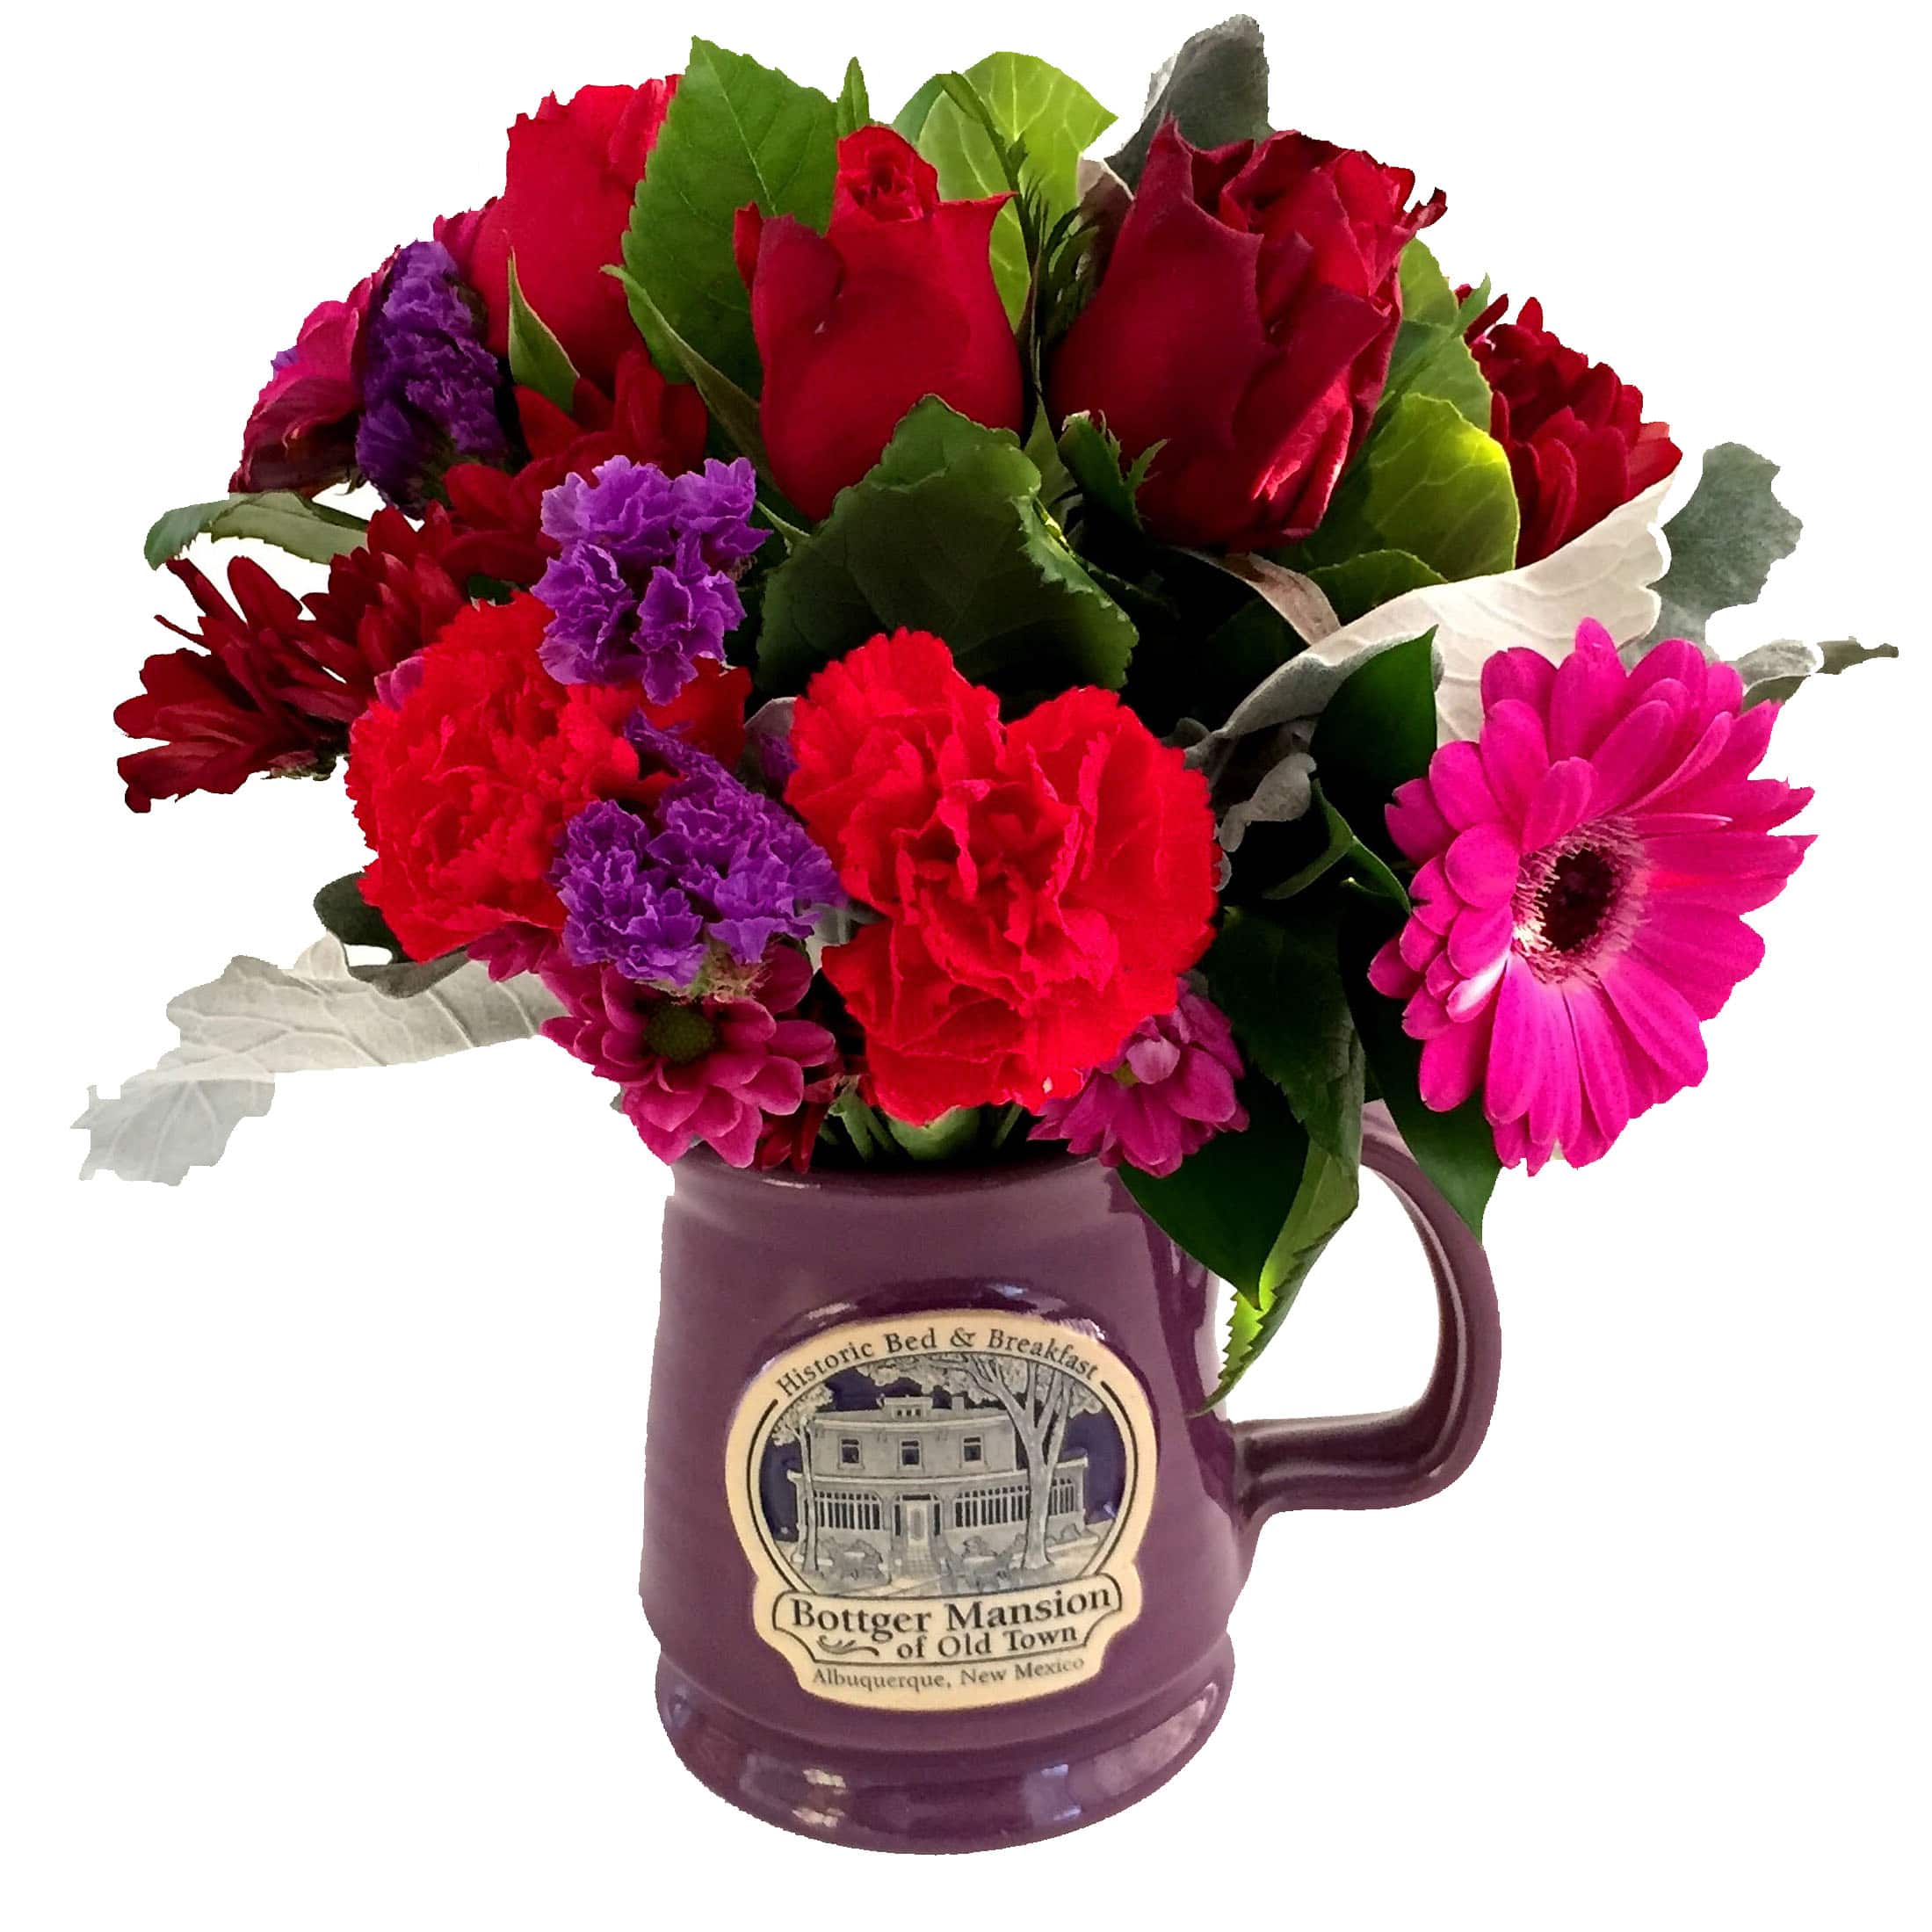 Flowers in flower vase